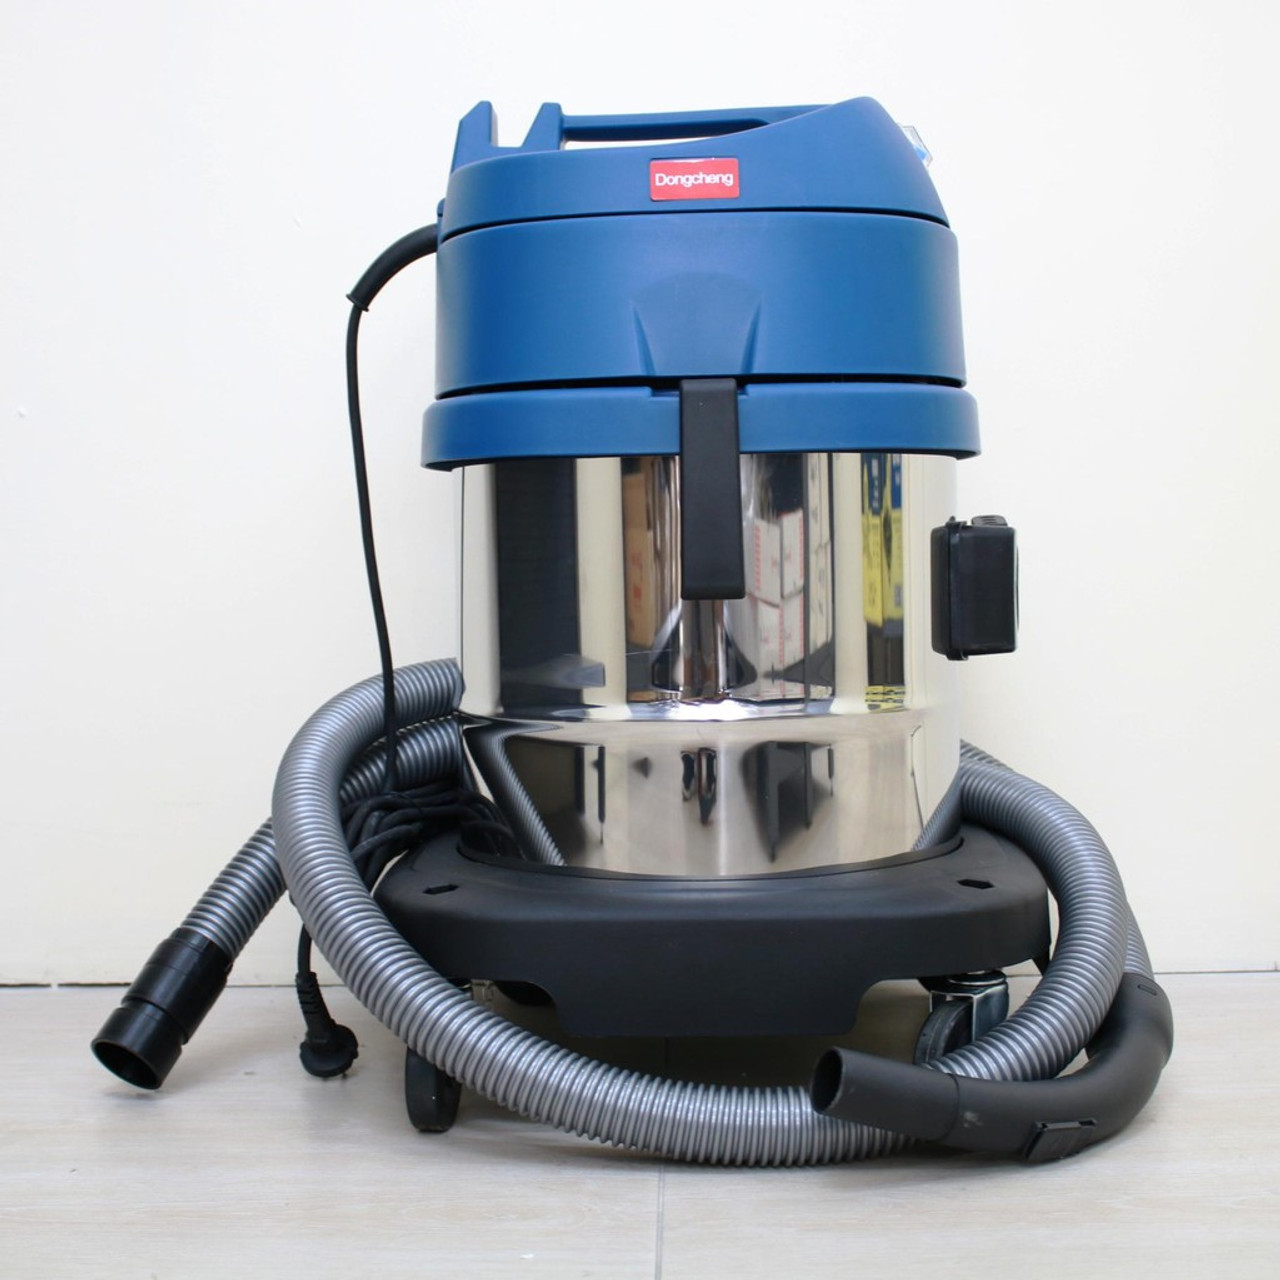 Dongcheng Vacuum cleaner